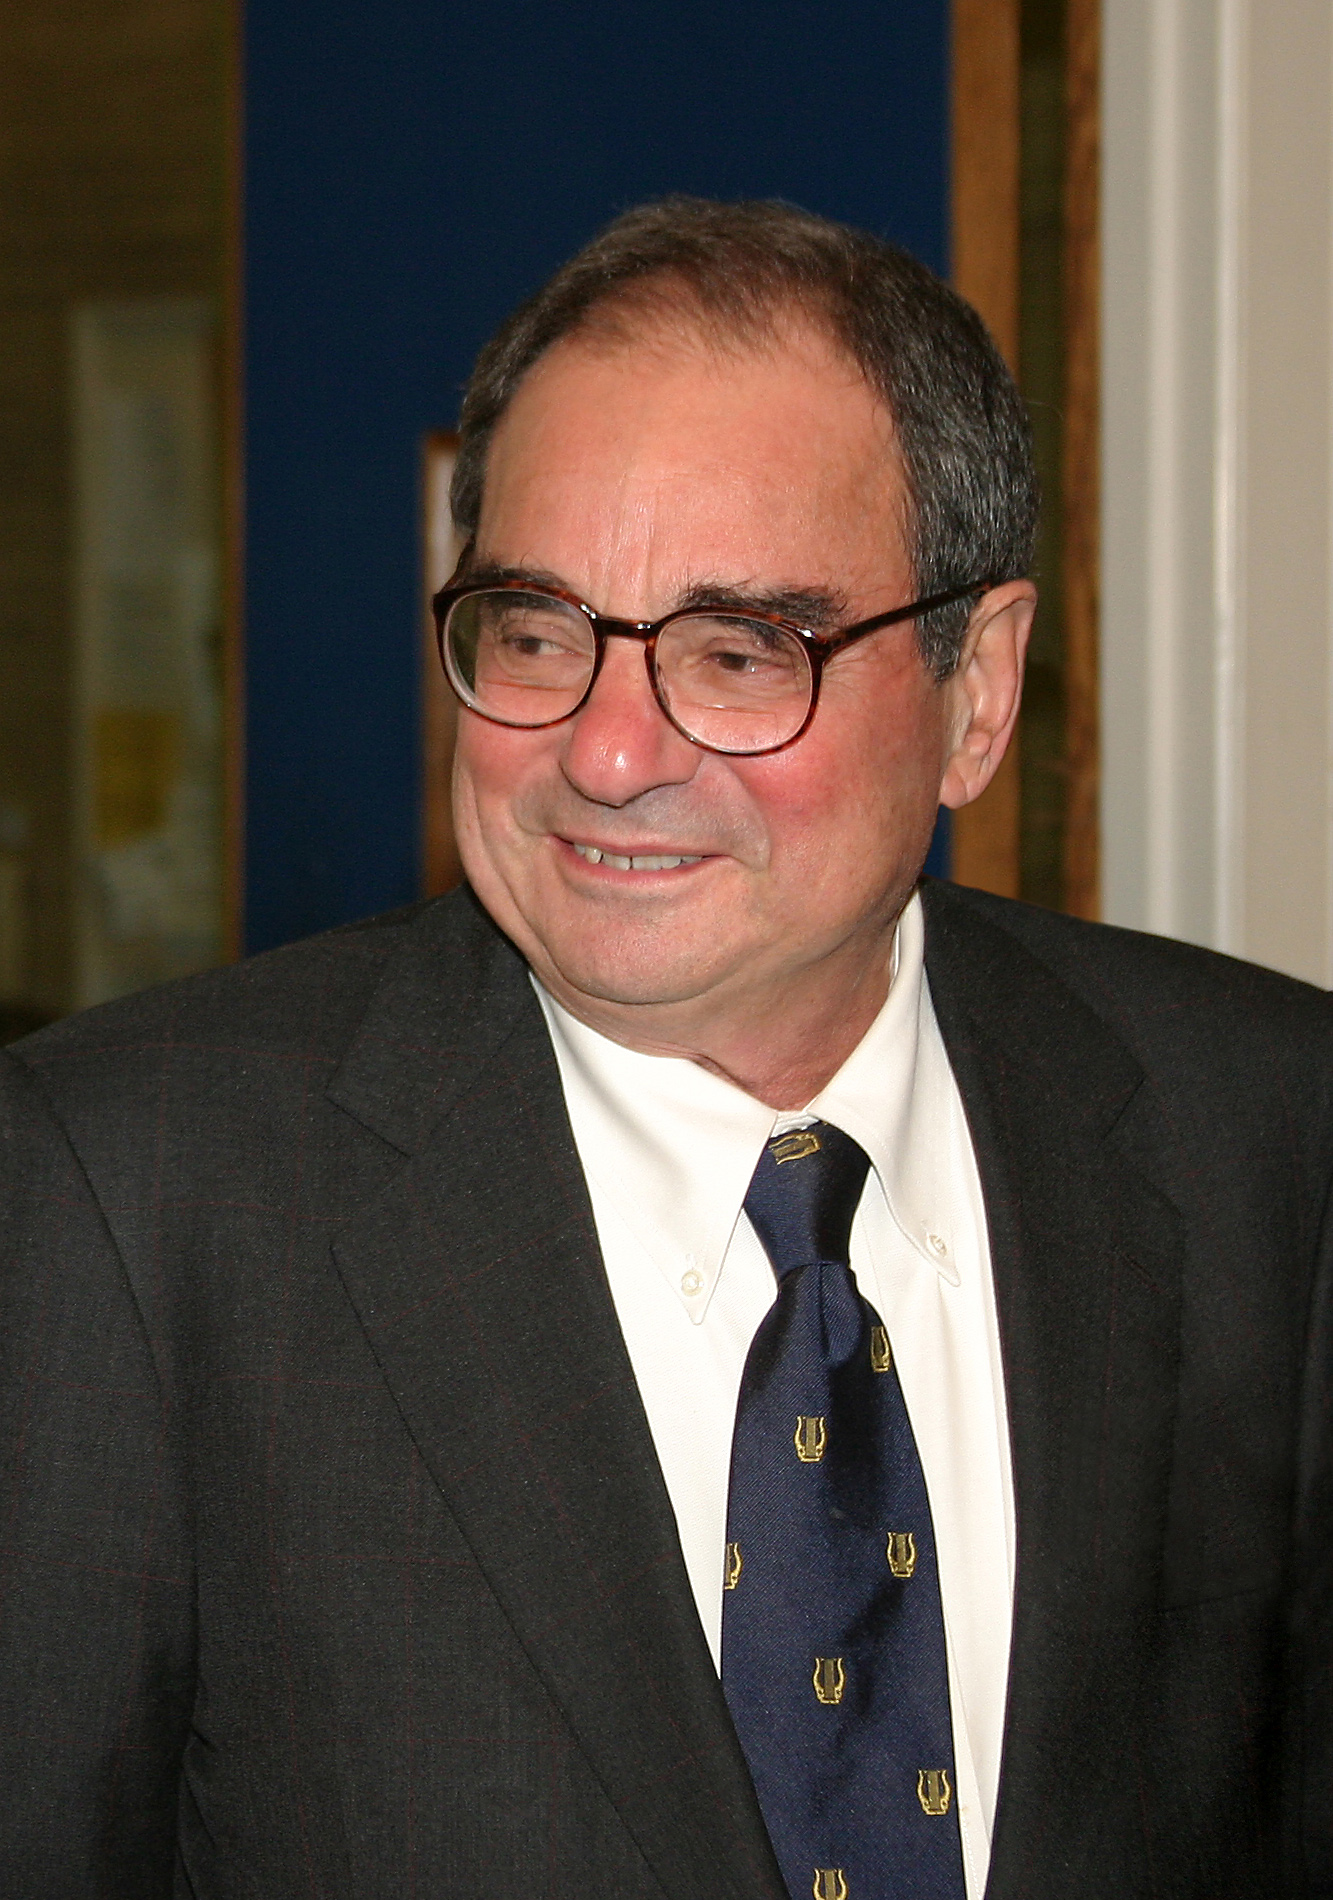 Portrait of Daniel Steiner, wearing suit and tie, looking to the left